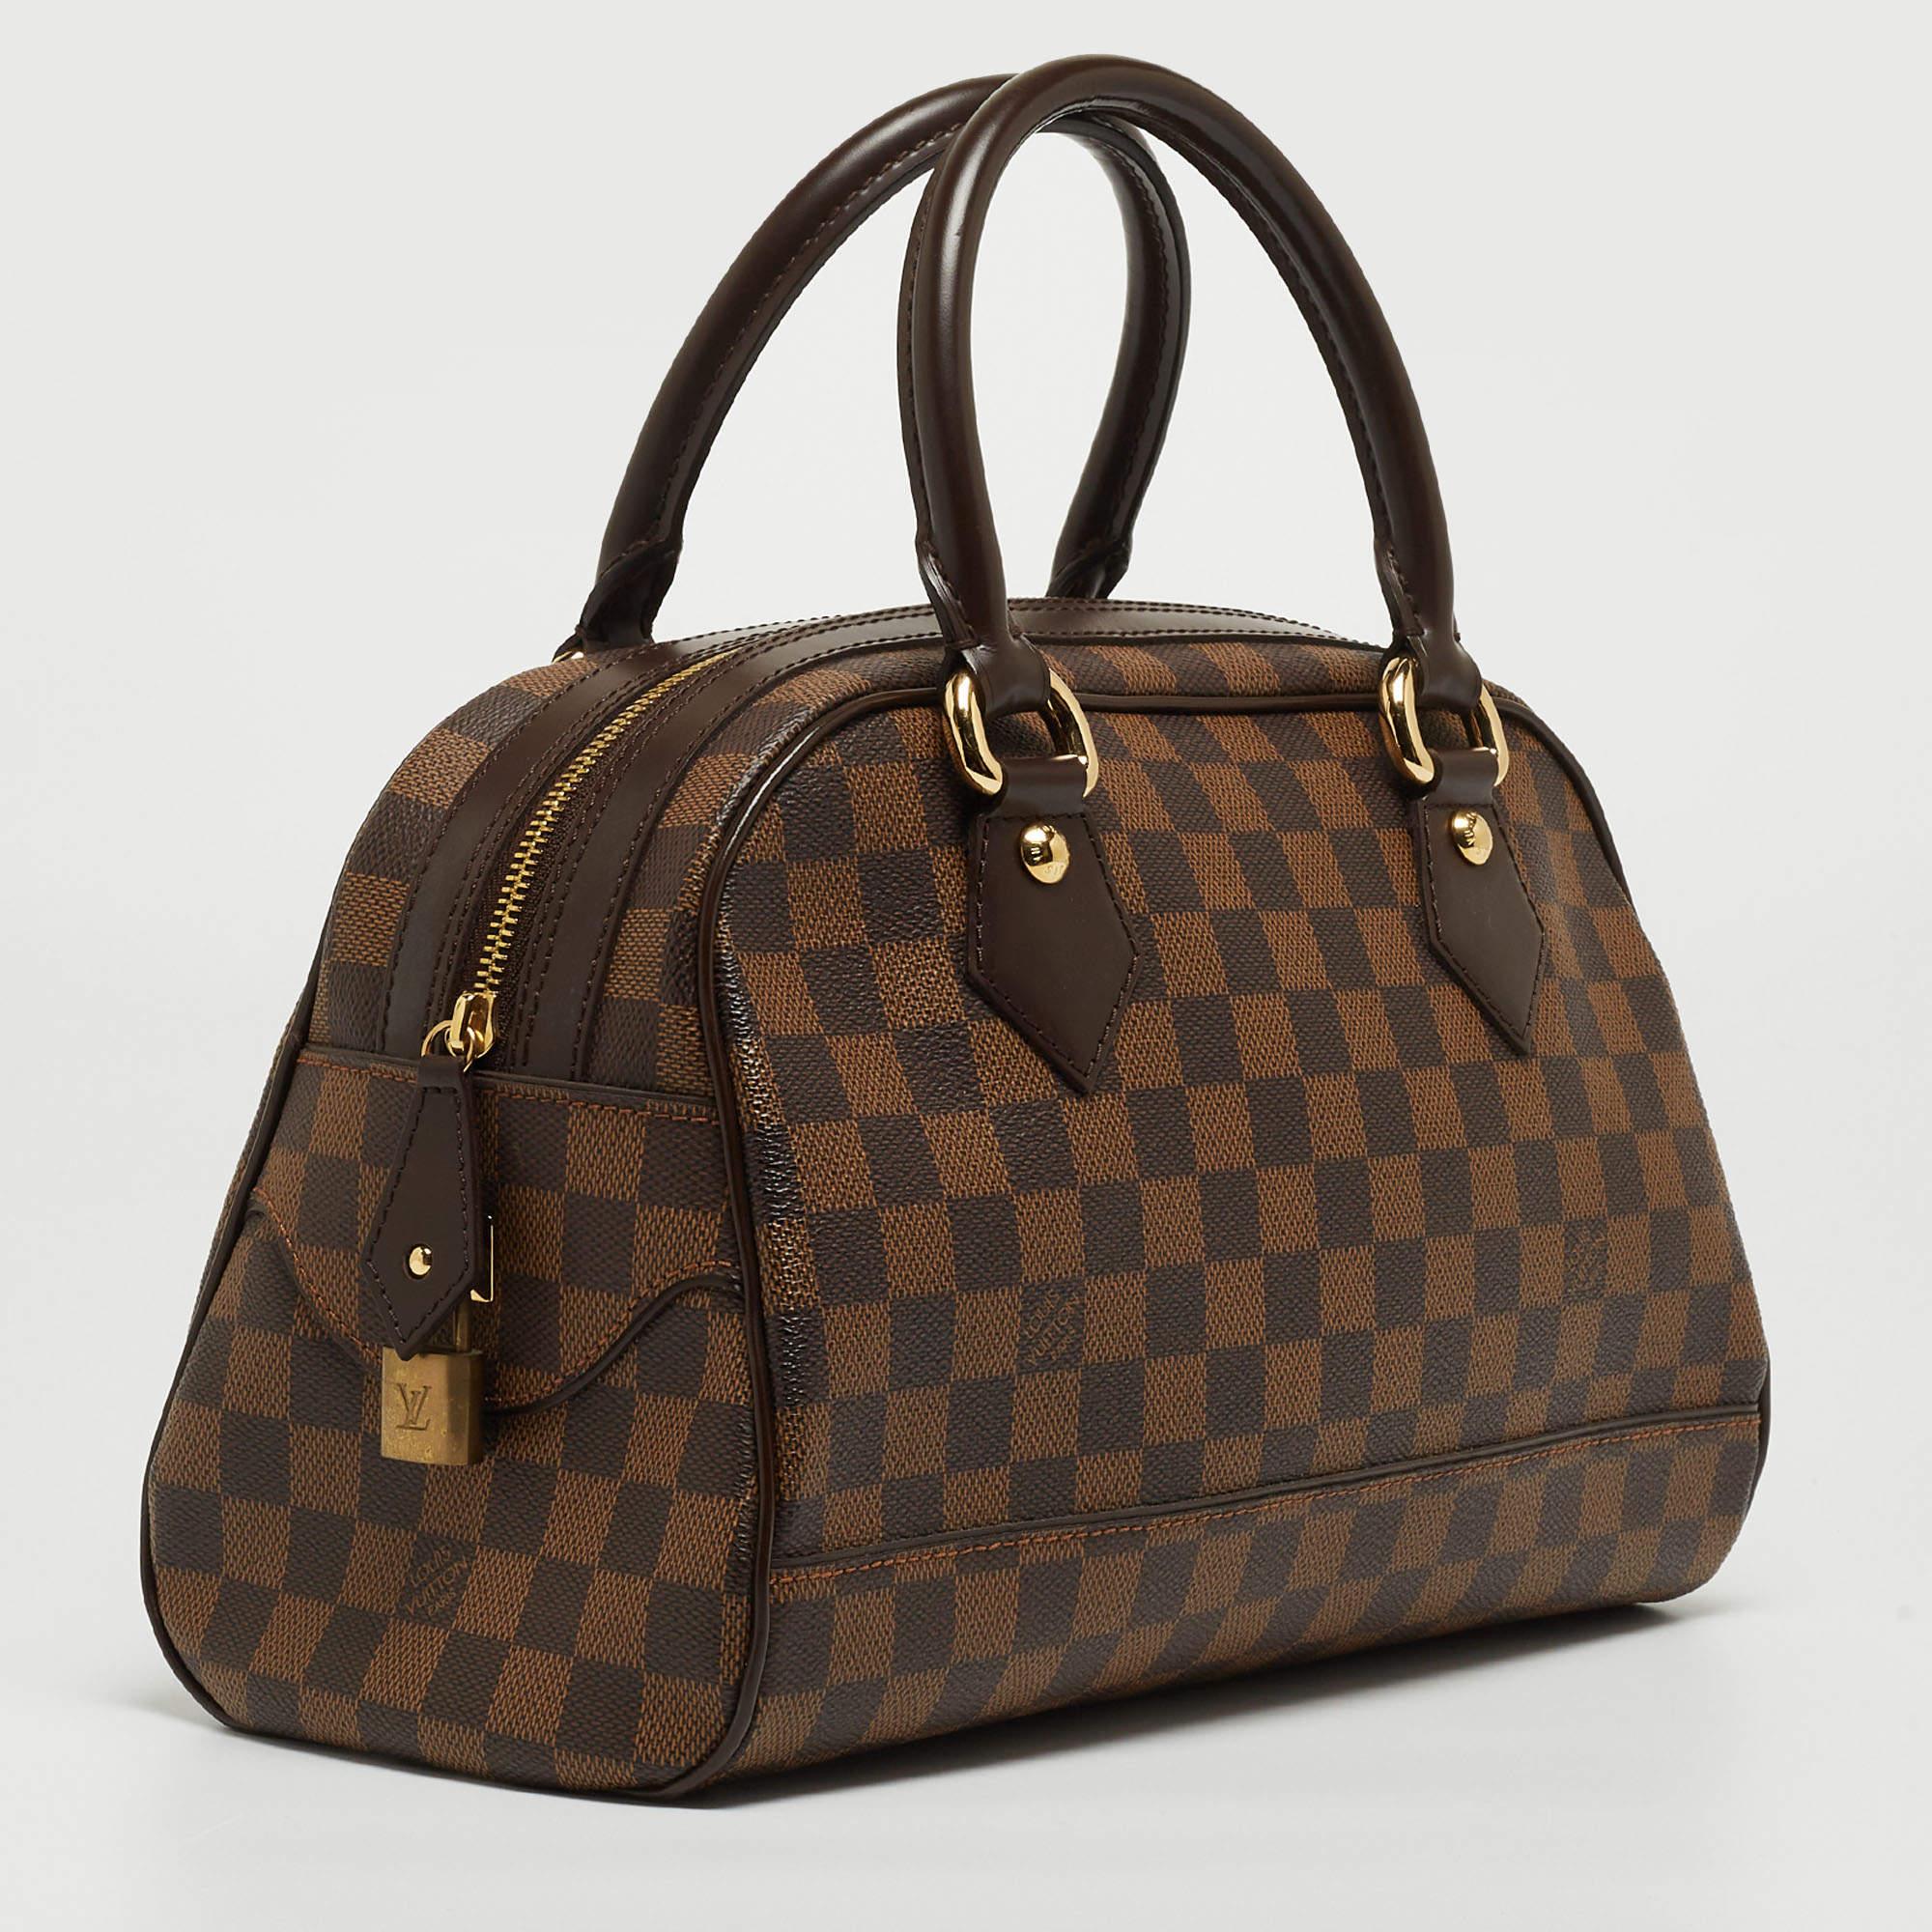 Louis Vuitton Damier Ebene Canvas Duomo Bag In Good Condition For Sale In Dubai, Al Qouz 2